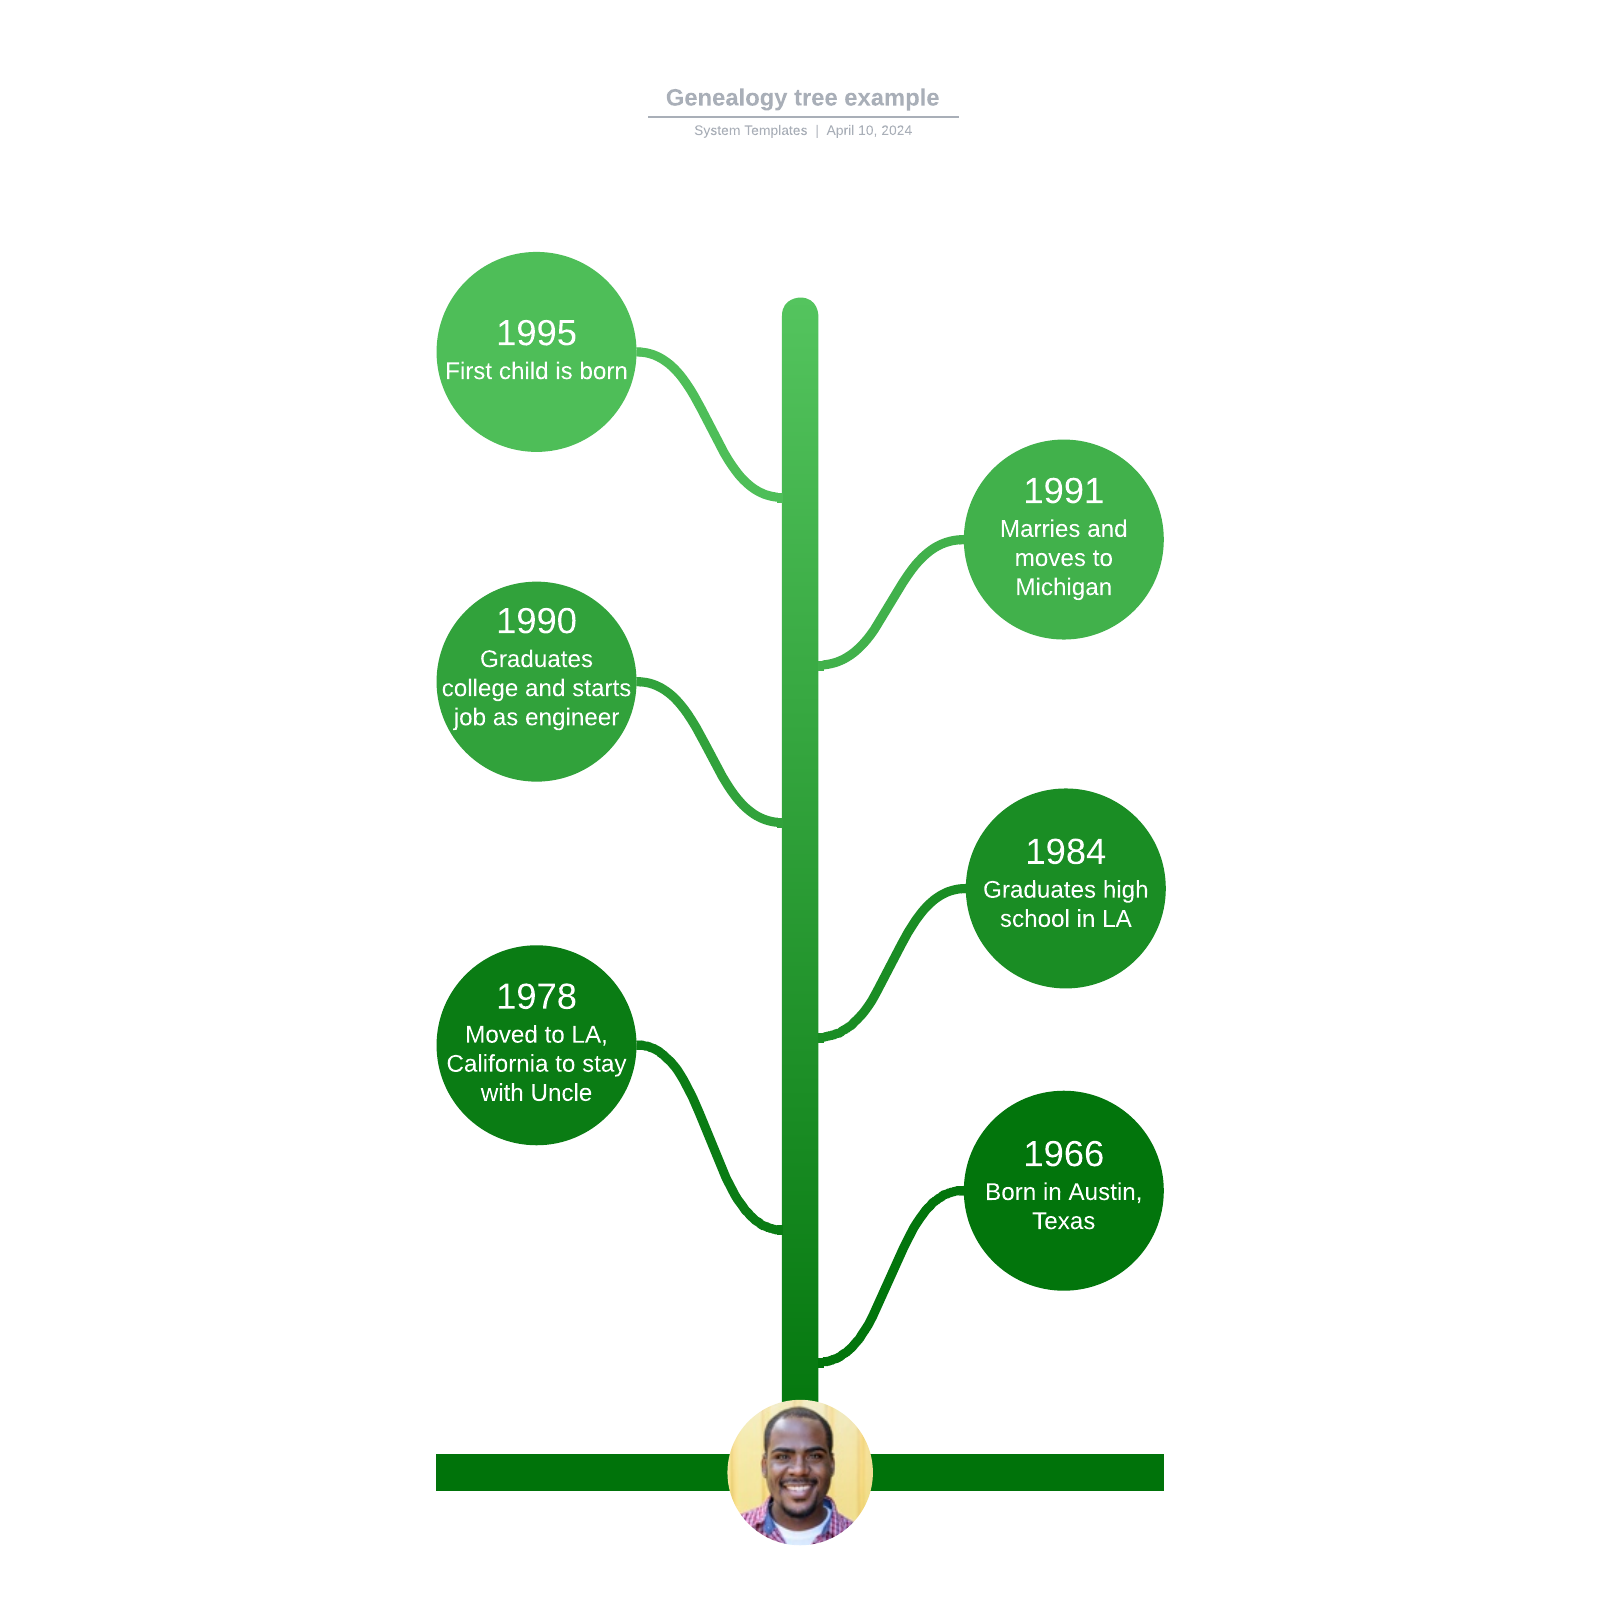 Genealogy tree example example